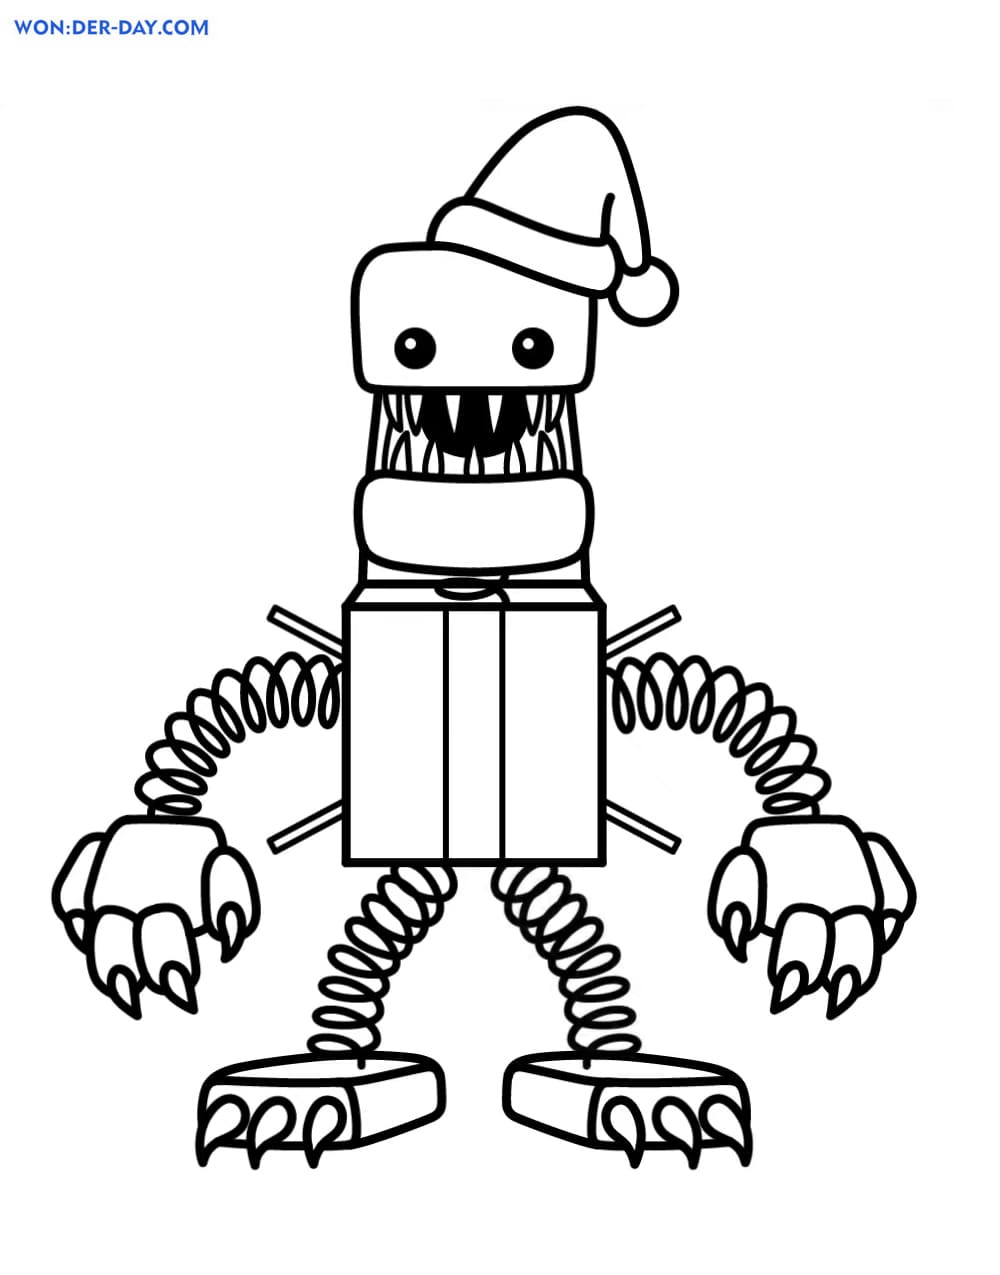 Desenhos para colorir de Boxy Boo (Projeto: Playtime)